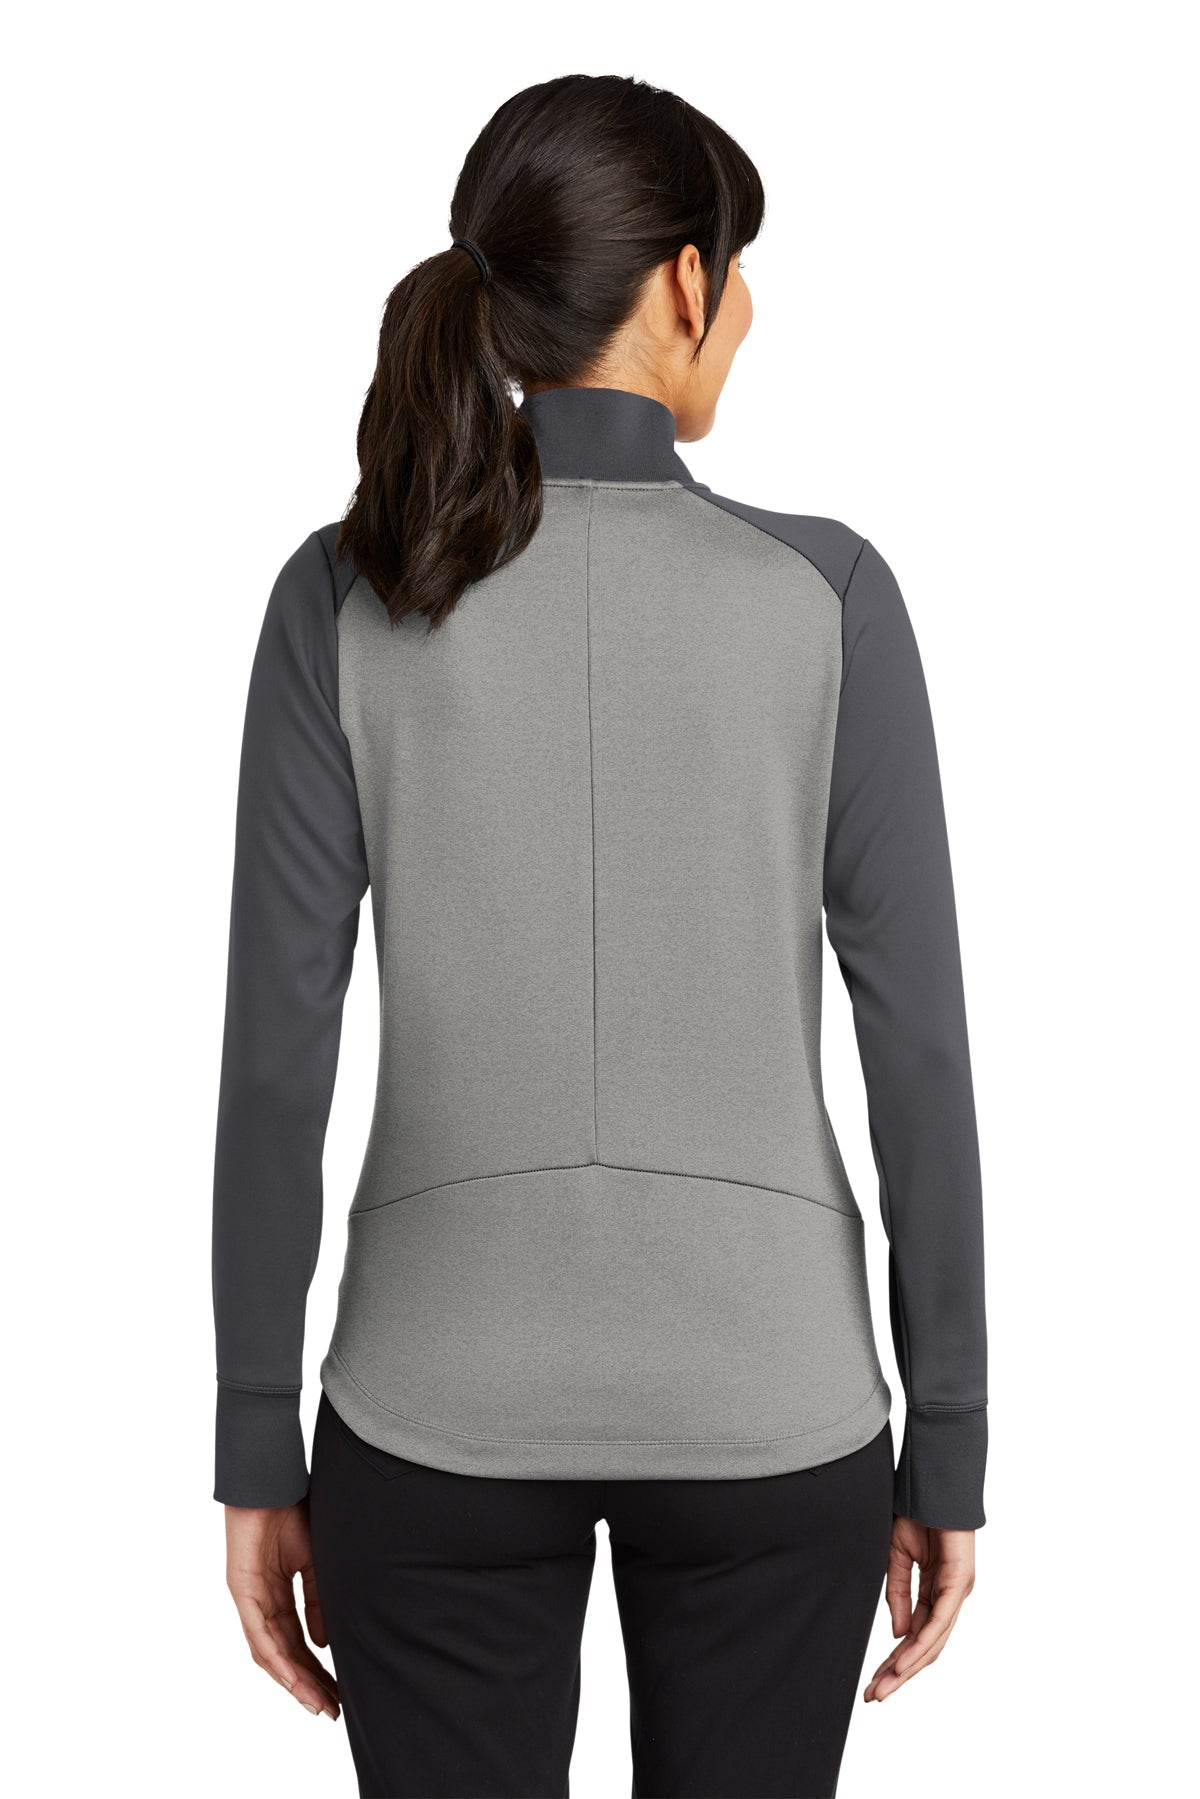 Nike Ladies Dri-FIT Custom Quarter Zip Cover-Ups, Athletic Grey Heather